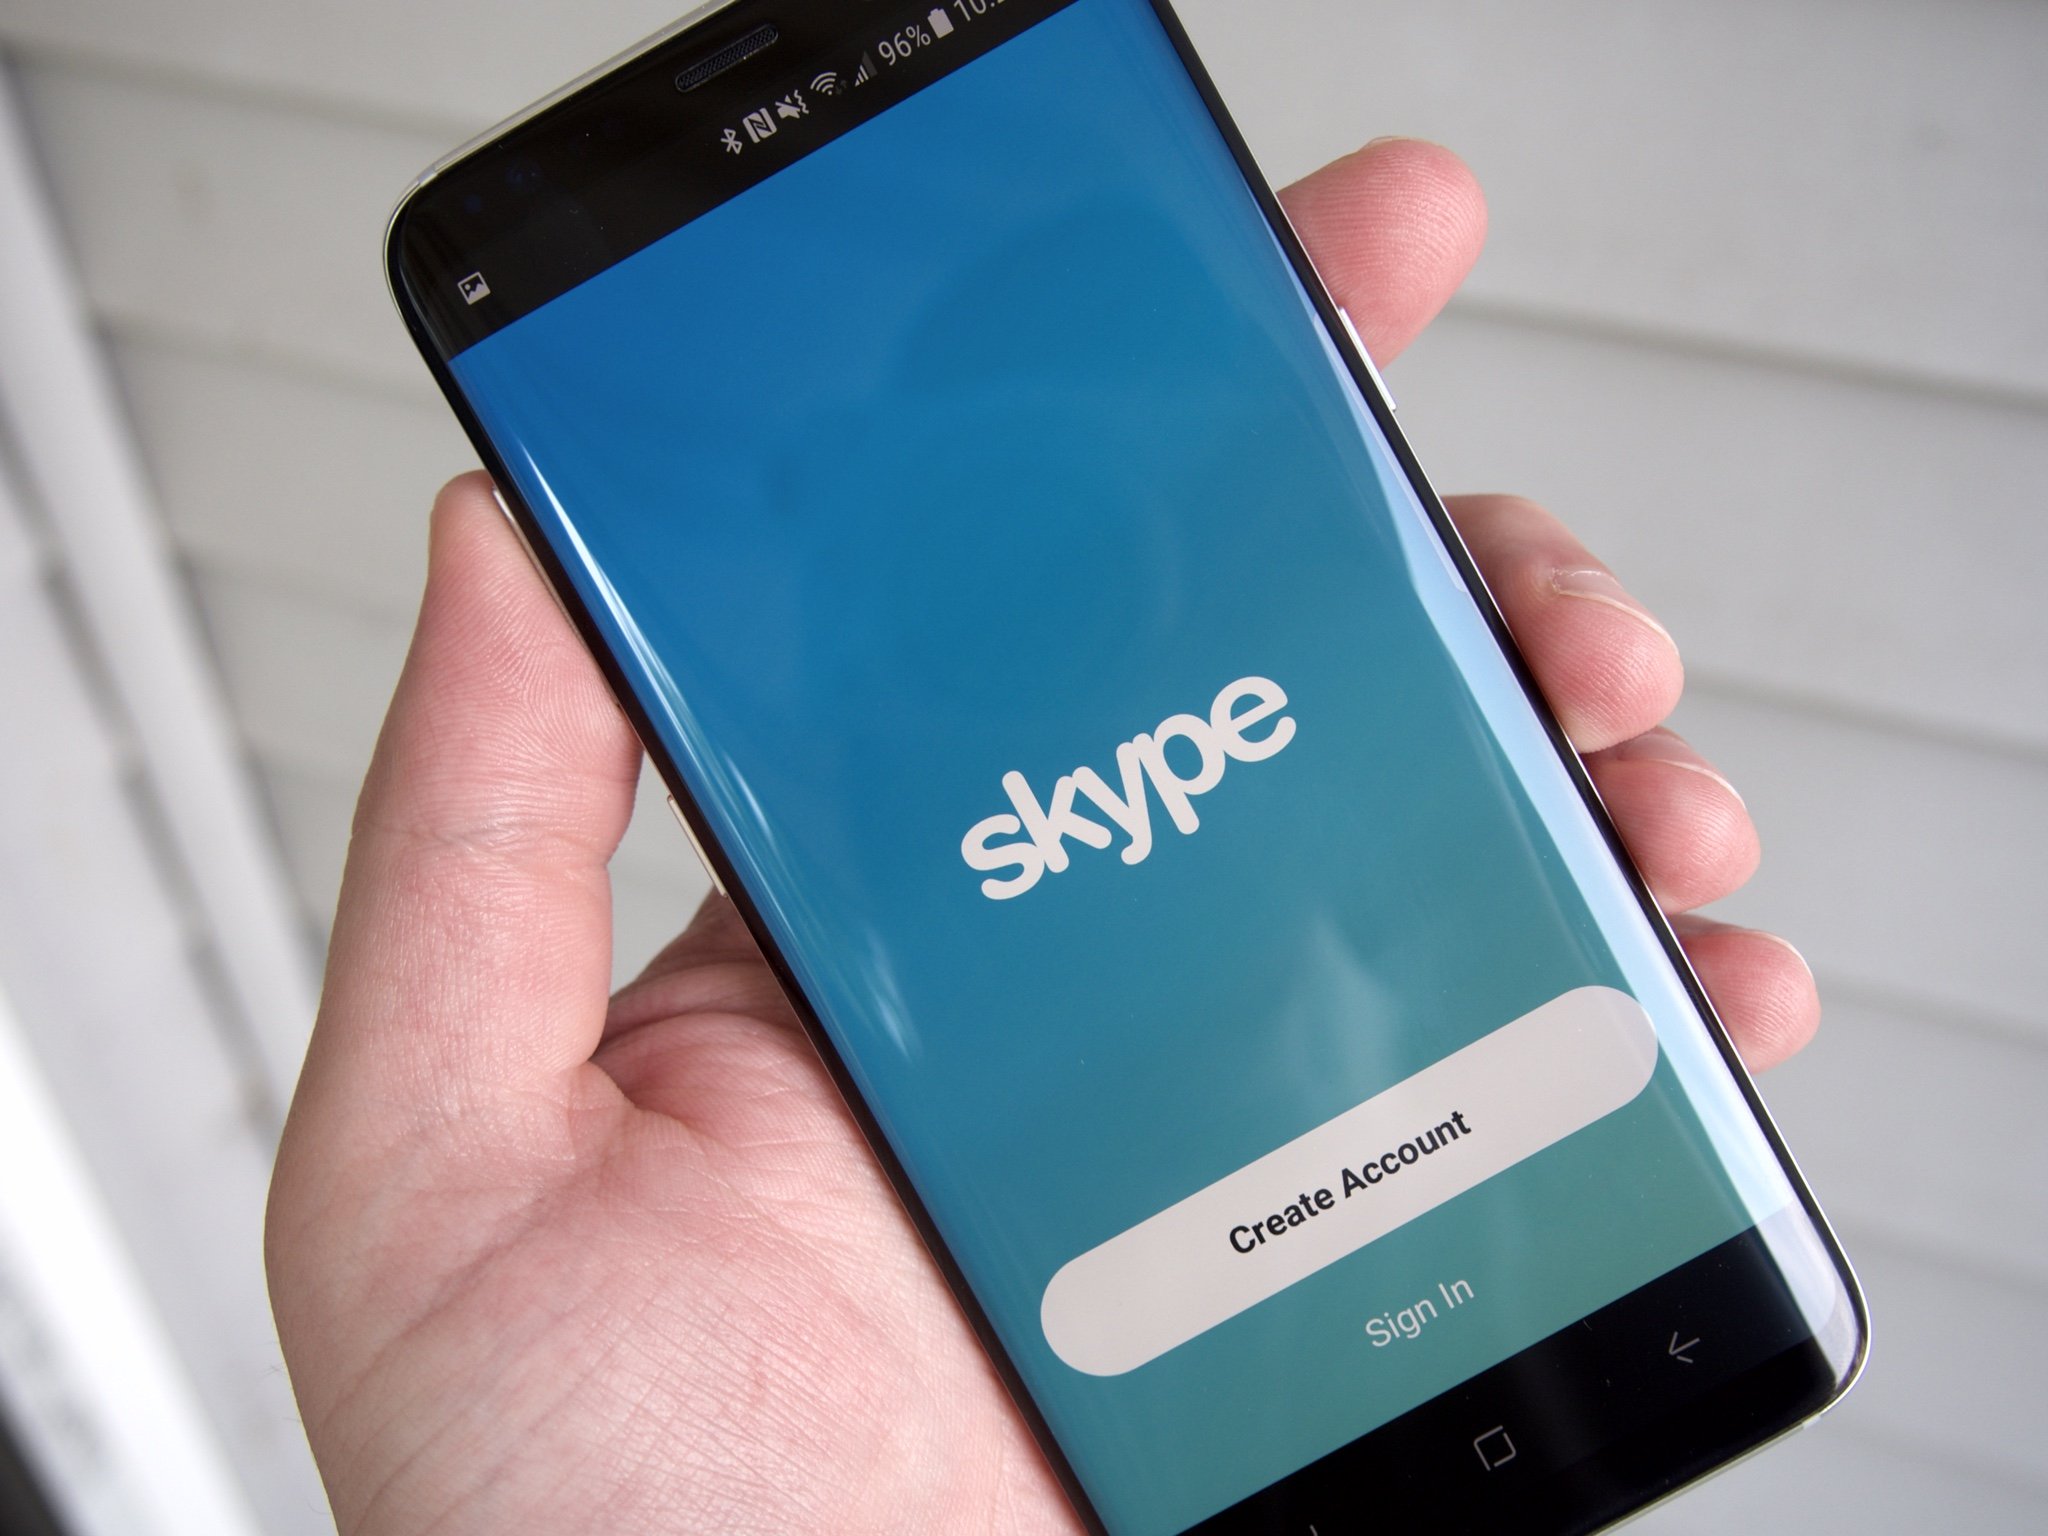 skype-splash-android-gs8.jpg?itok=9Os3--